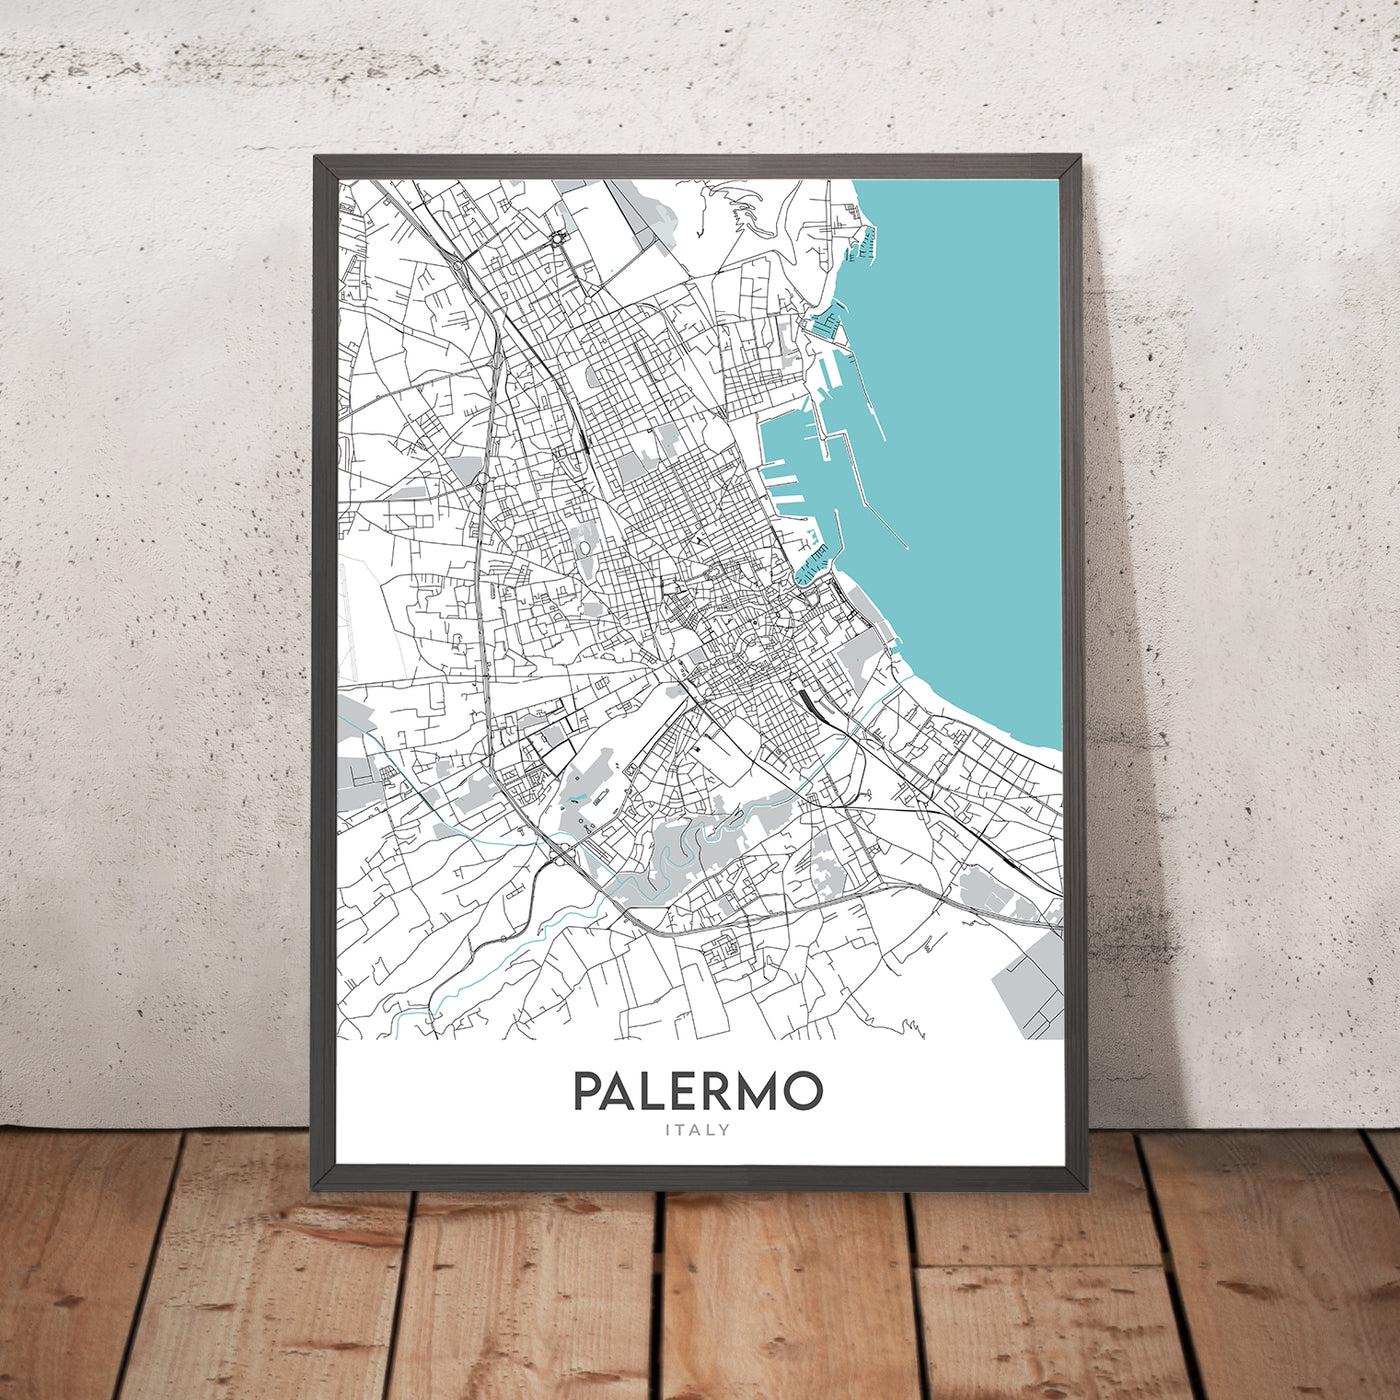 Moderner Stadtplan von Palermo, Italien: Albergheria, Kalsa, Teatro Massimo, Politeama, Quattro Canti